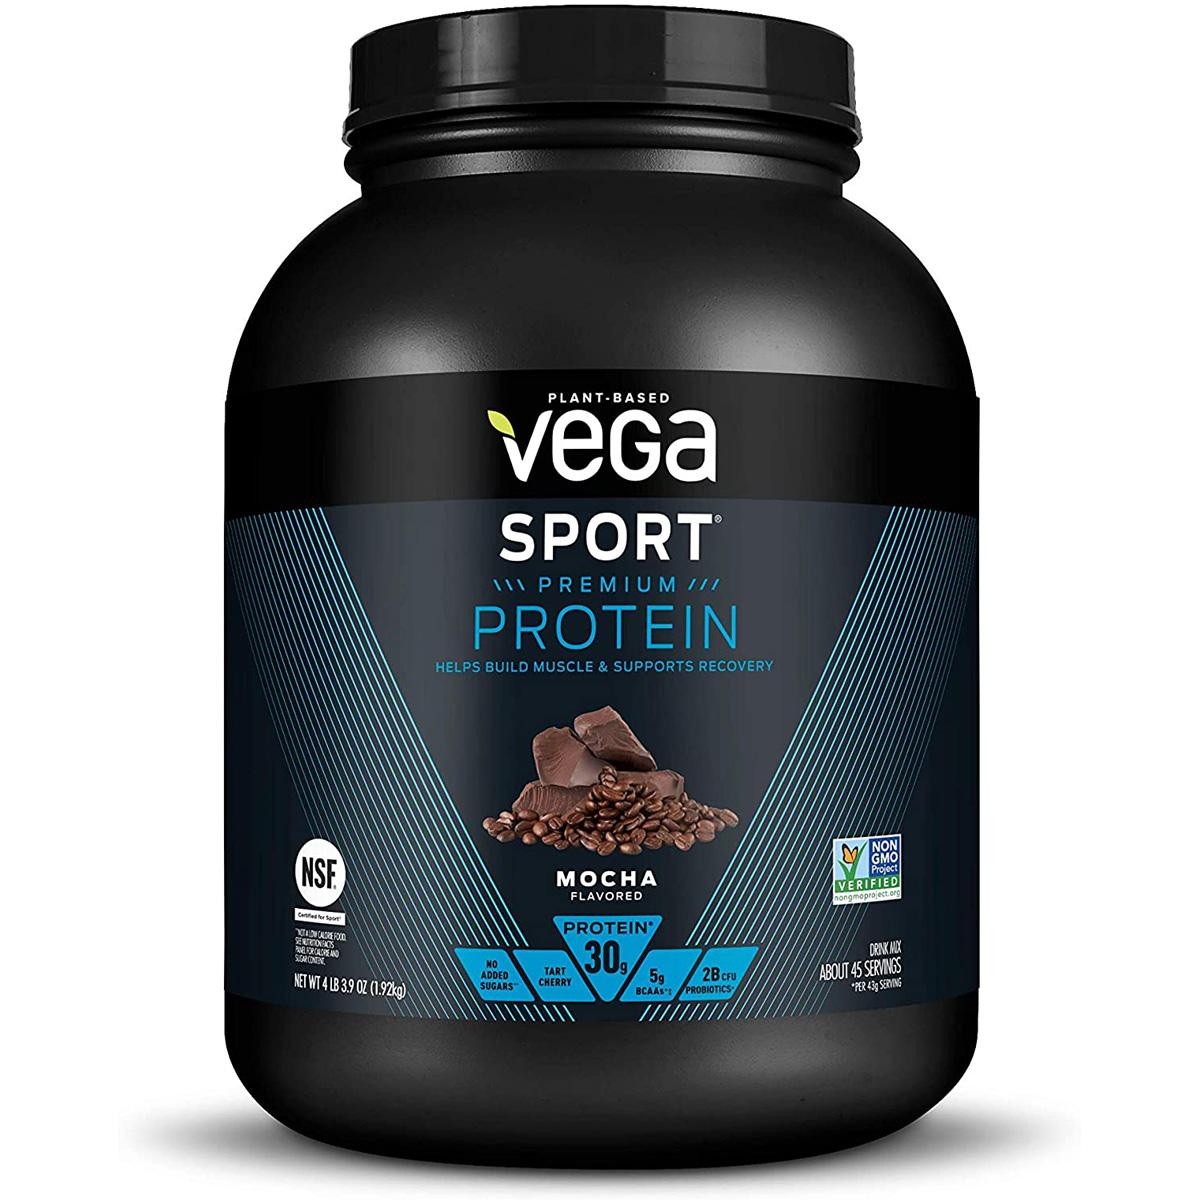 4lbs Vega Sport Premium Plant Based Protein Powder for $42.56 Shipped